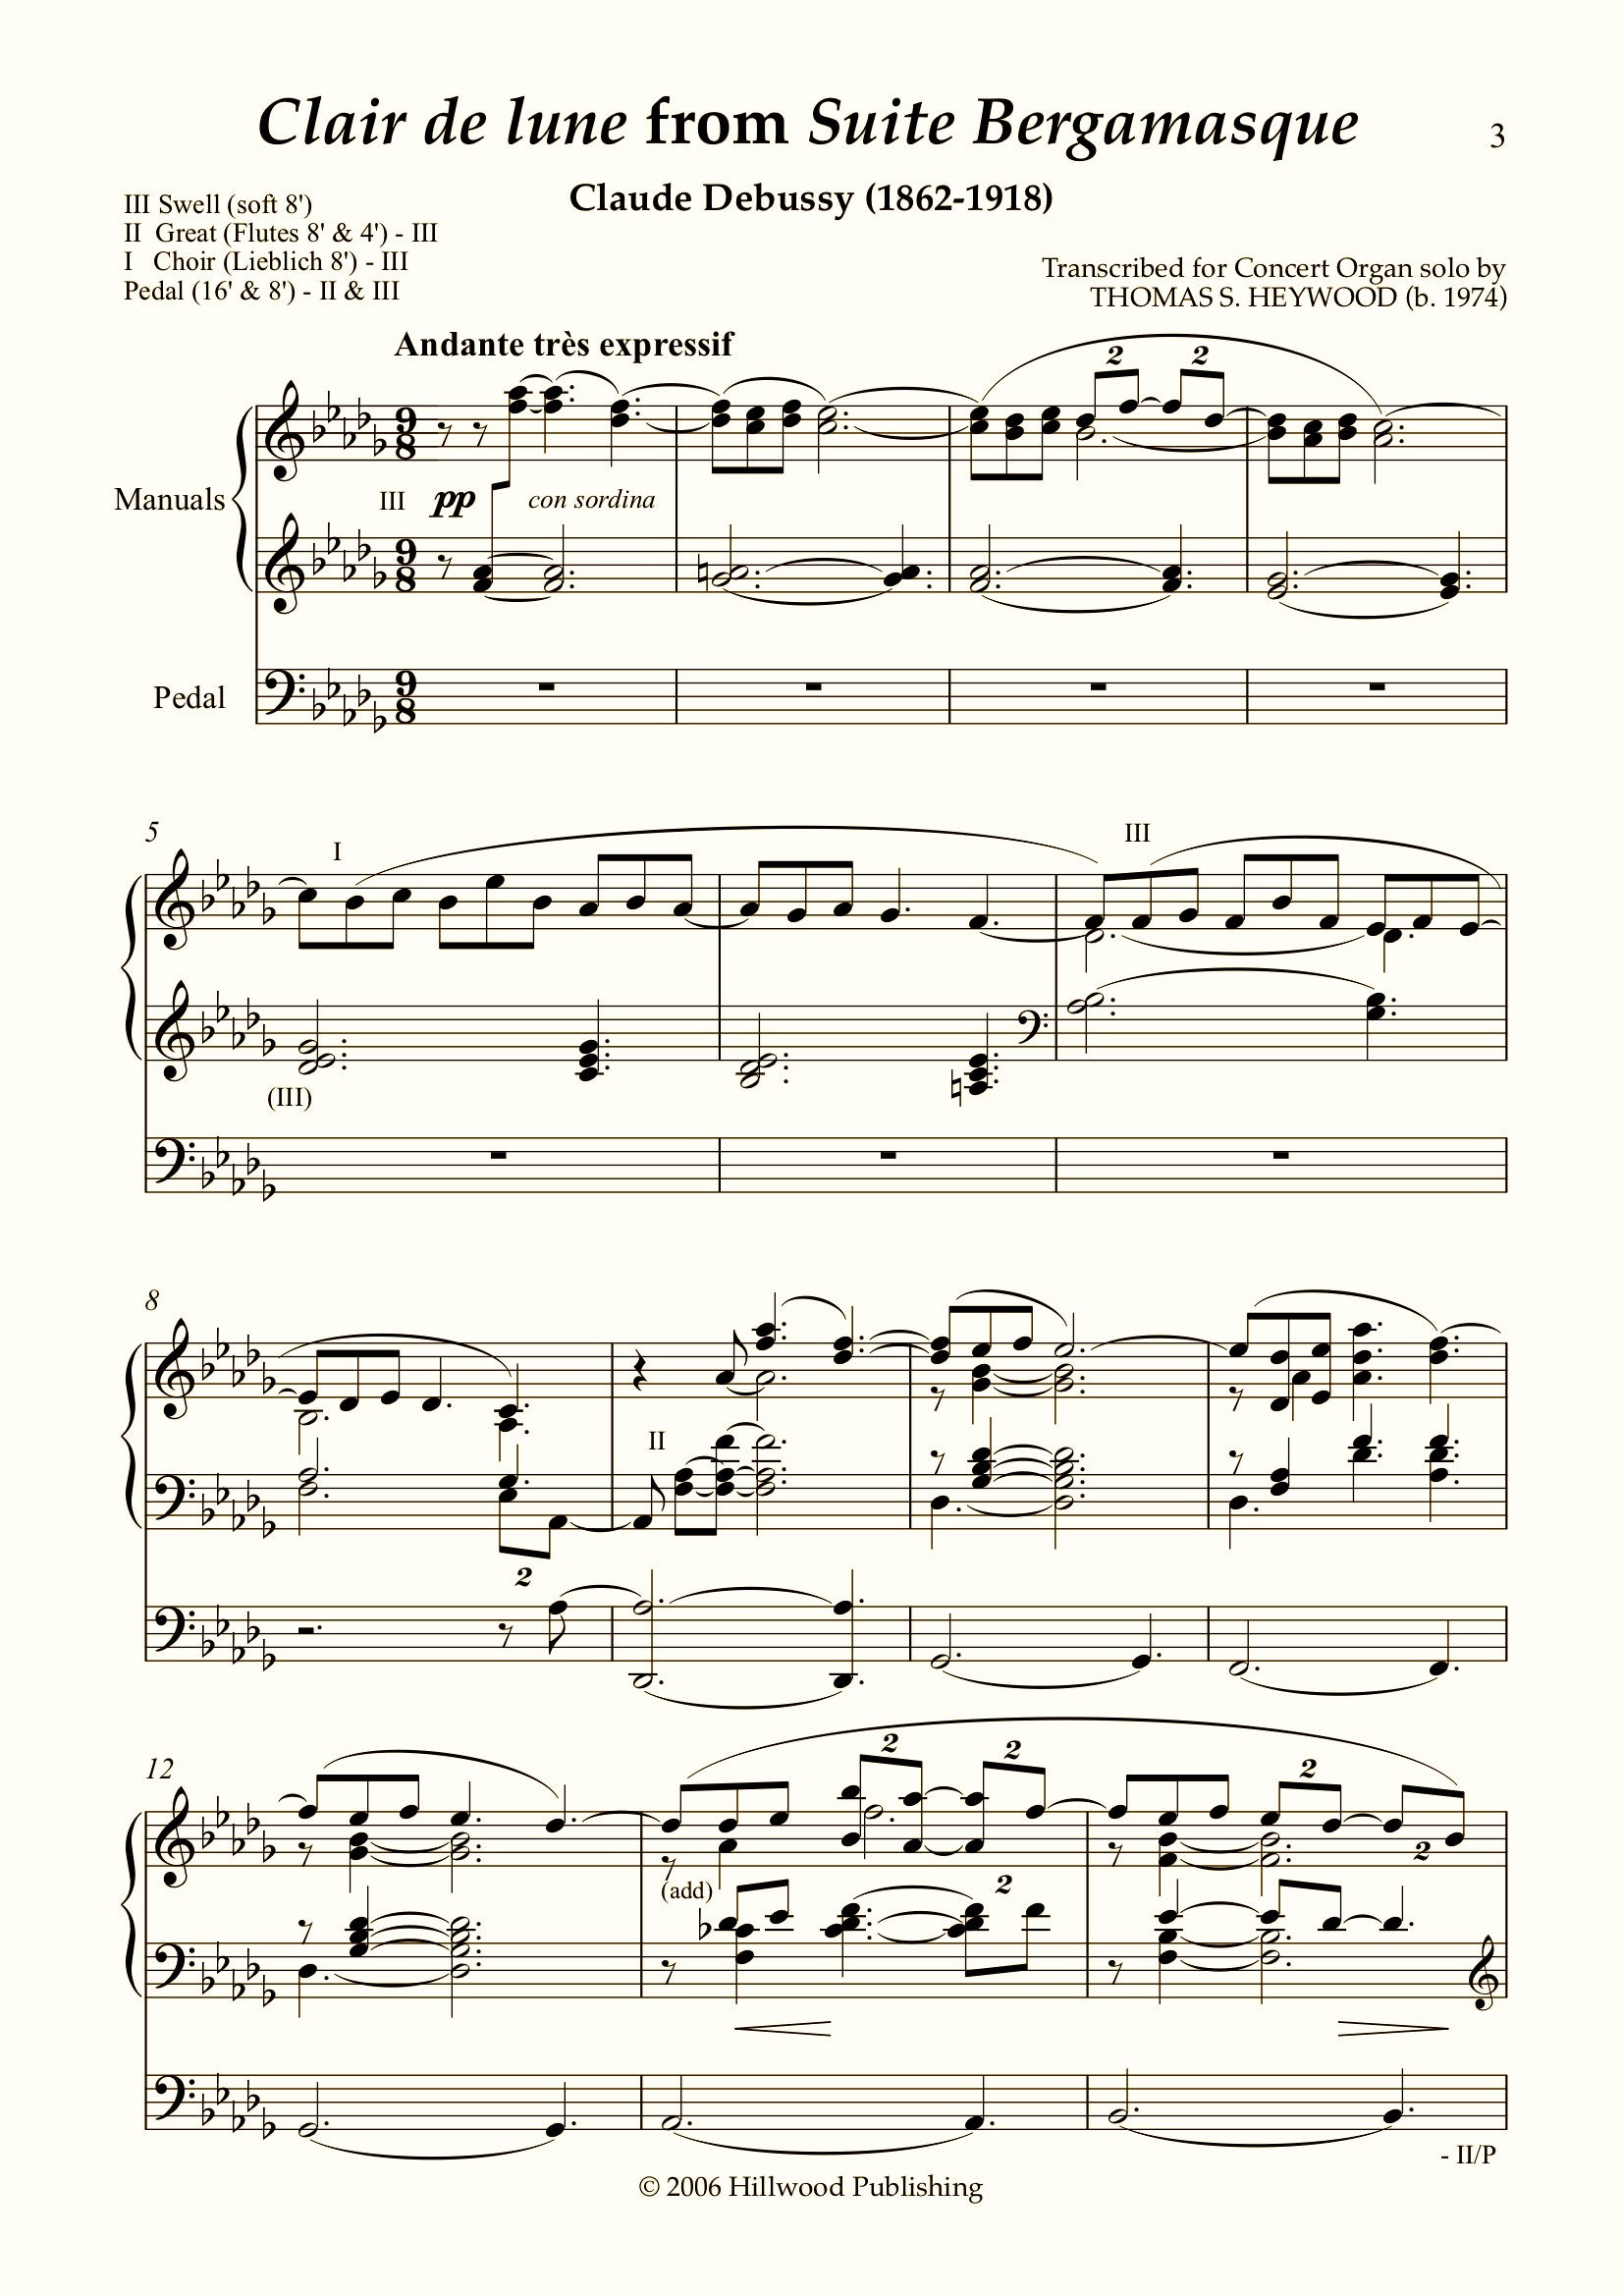 Debussy/Heywood - Clair de lune from Suite Bergamasque (Score) - Concert Organ International